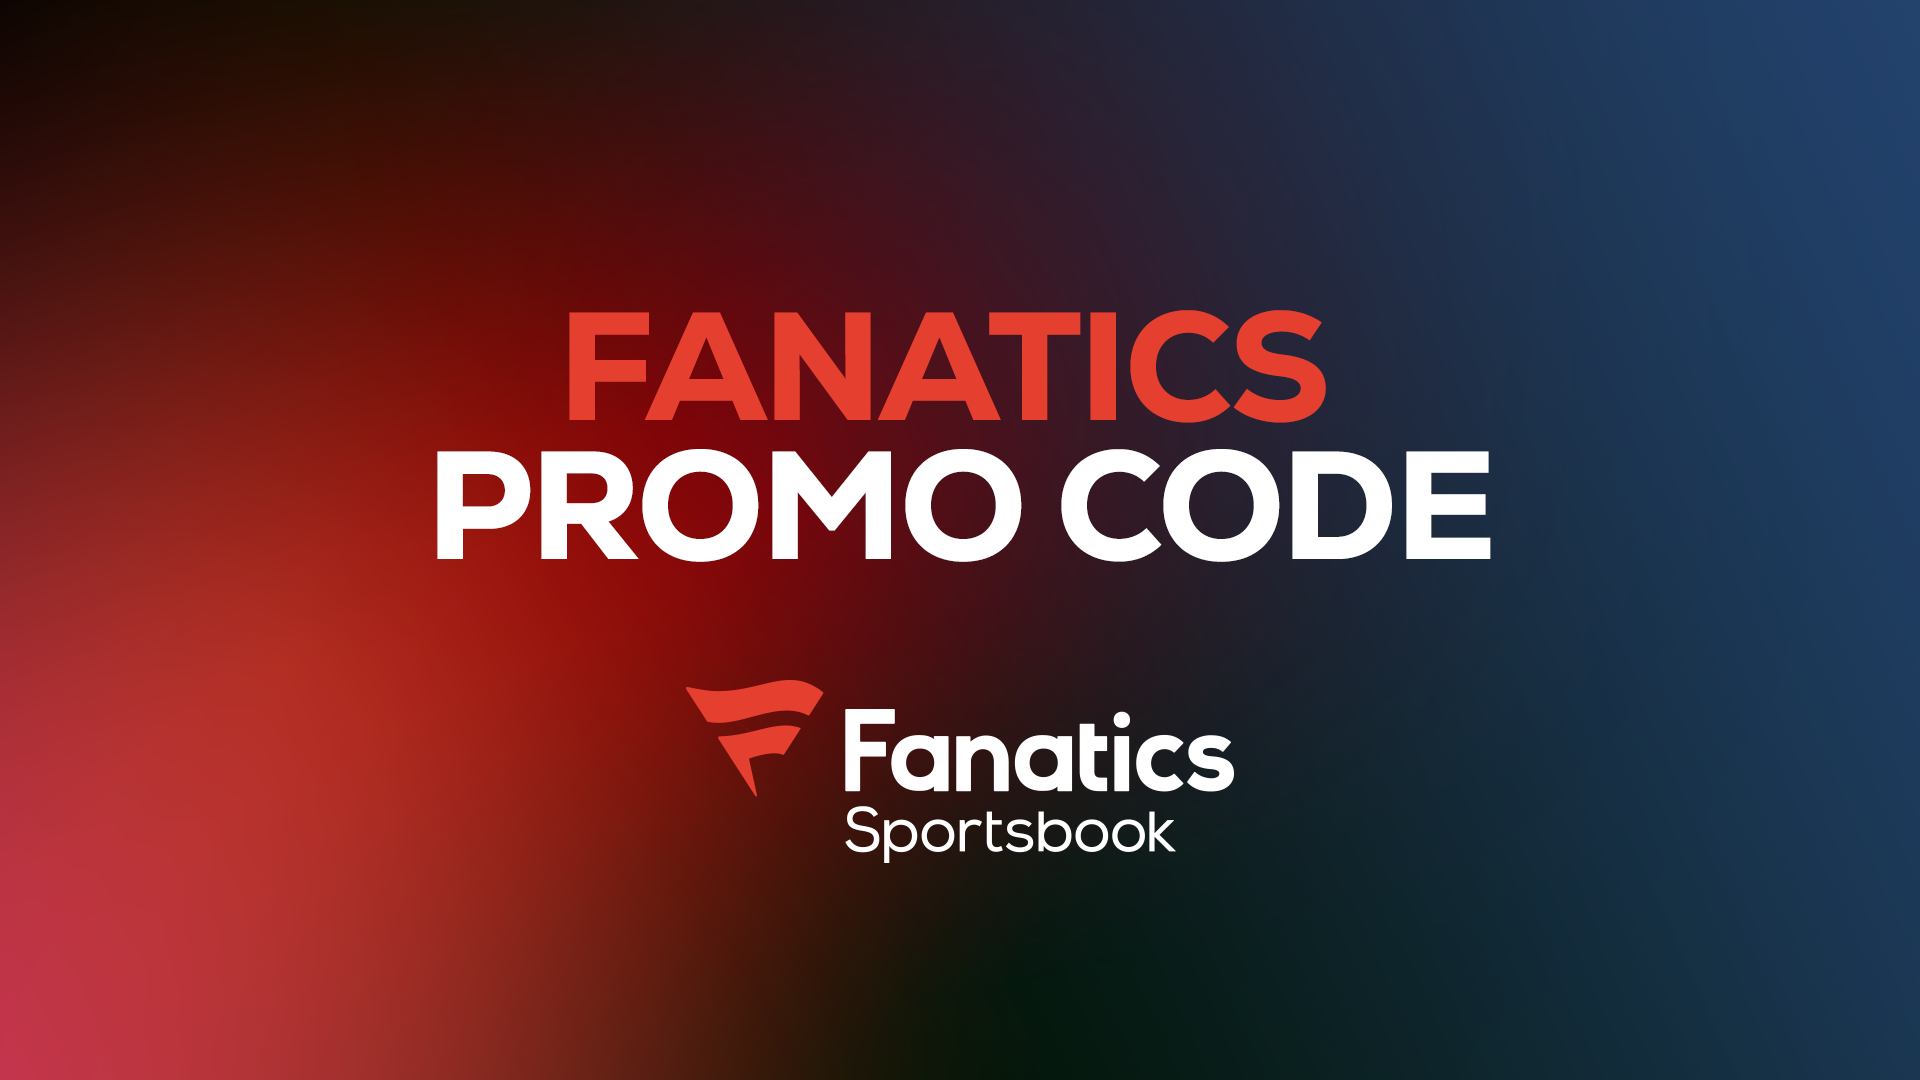 Fanatics Sportsbook promo: k UFC 300, NBA bonuses in NC, NY, more